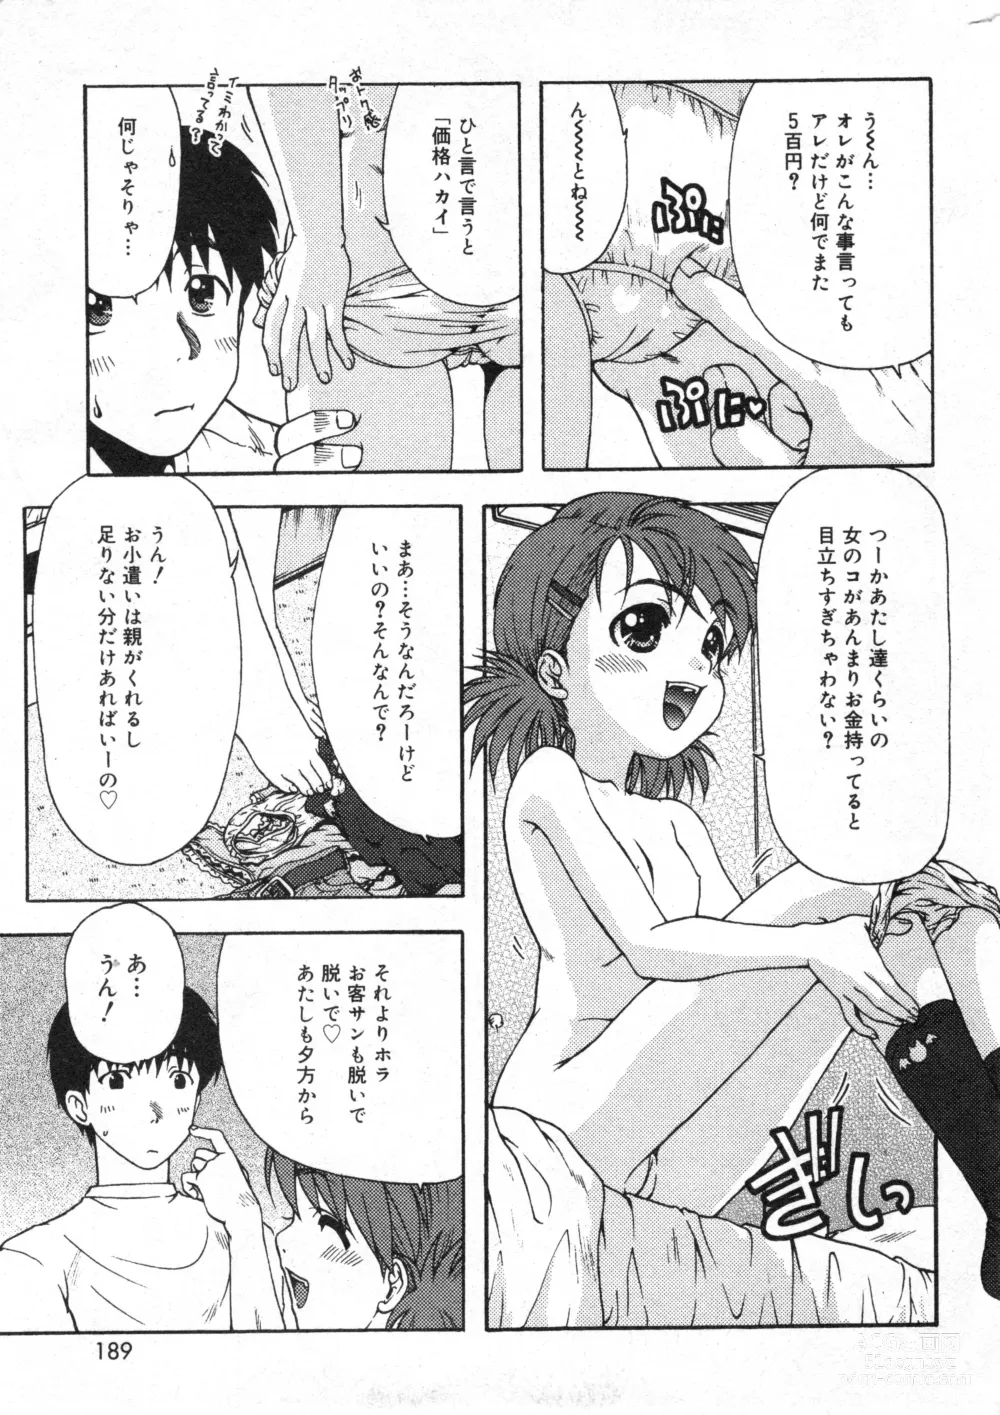 Page 189 of manga COMIC Minimon Vol. 18